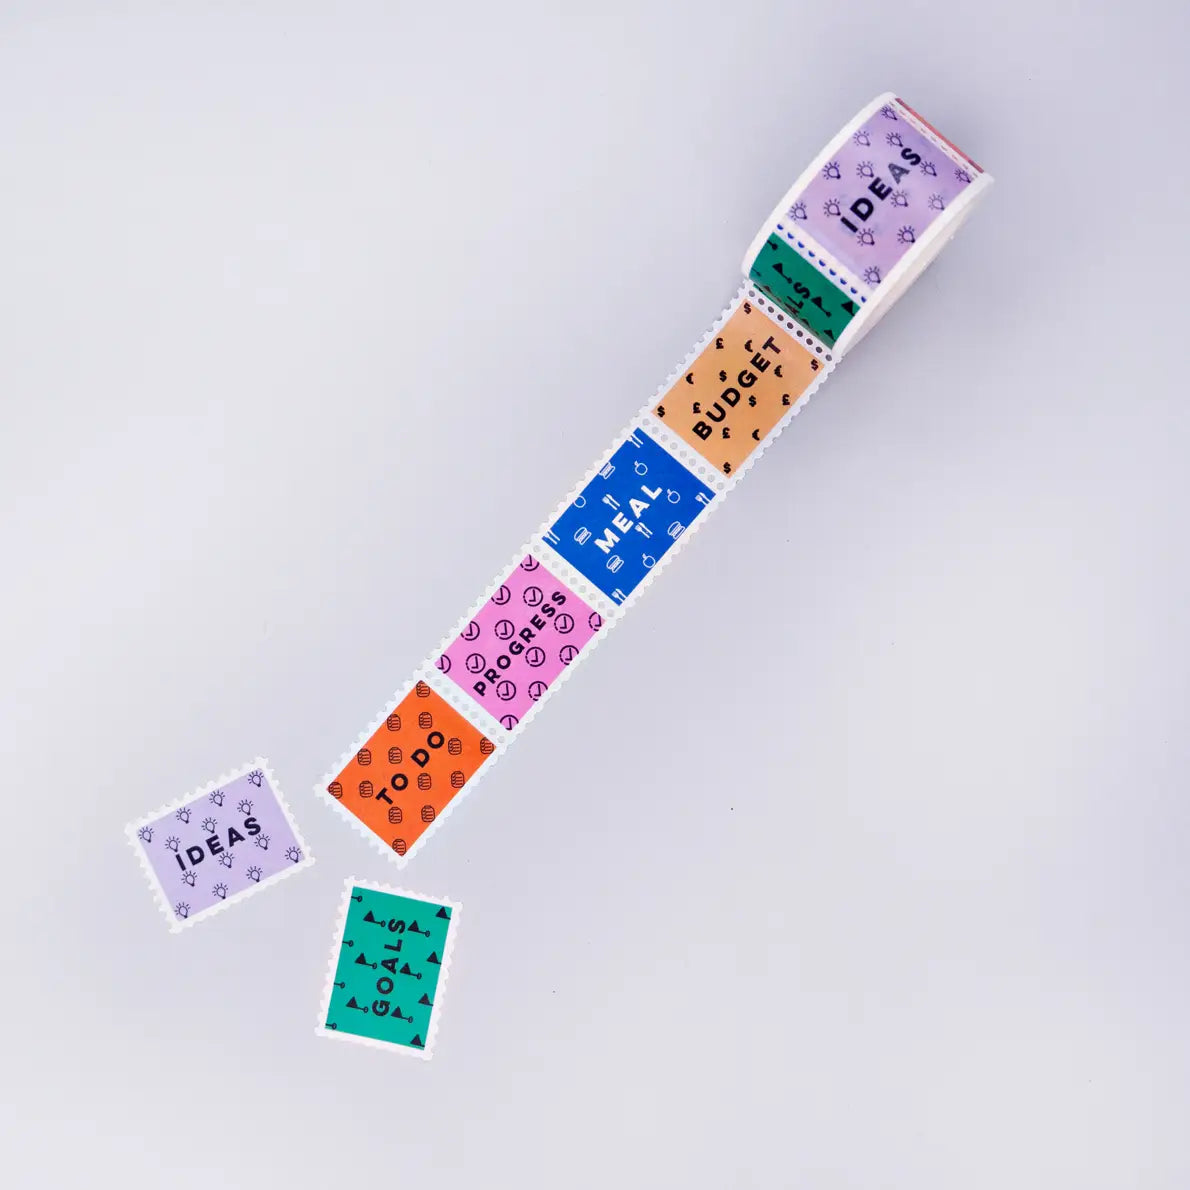 Get Organized Mix Stamp Washi Tape